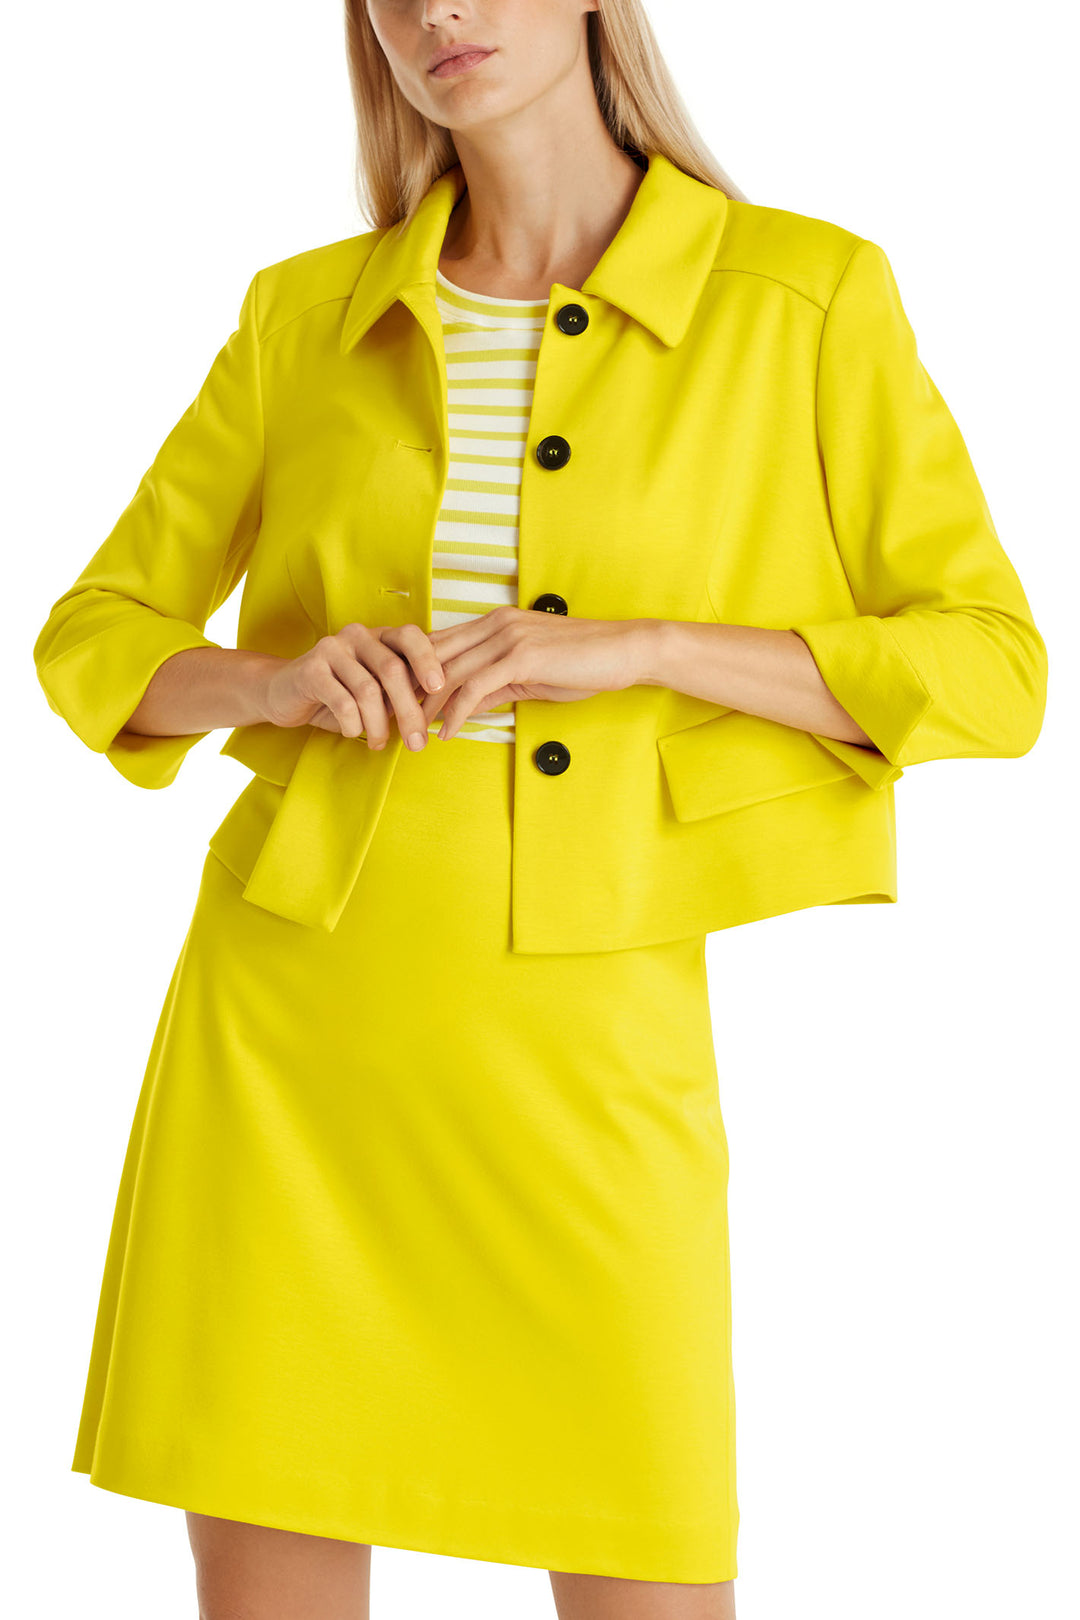 Marc Cain Additions WA 31.01 J24 431 Bright Sulphur Yellow Jersey Jacket - Olivia Grace Fashion